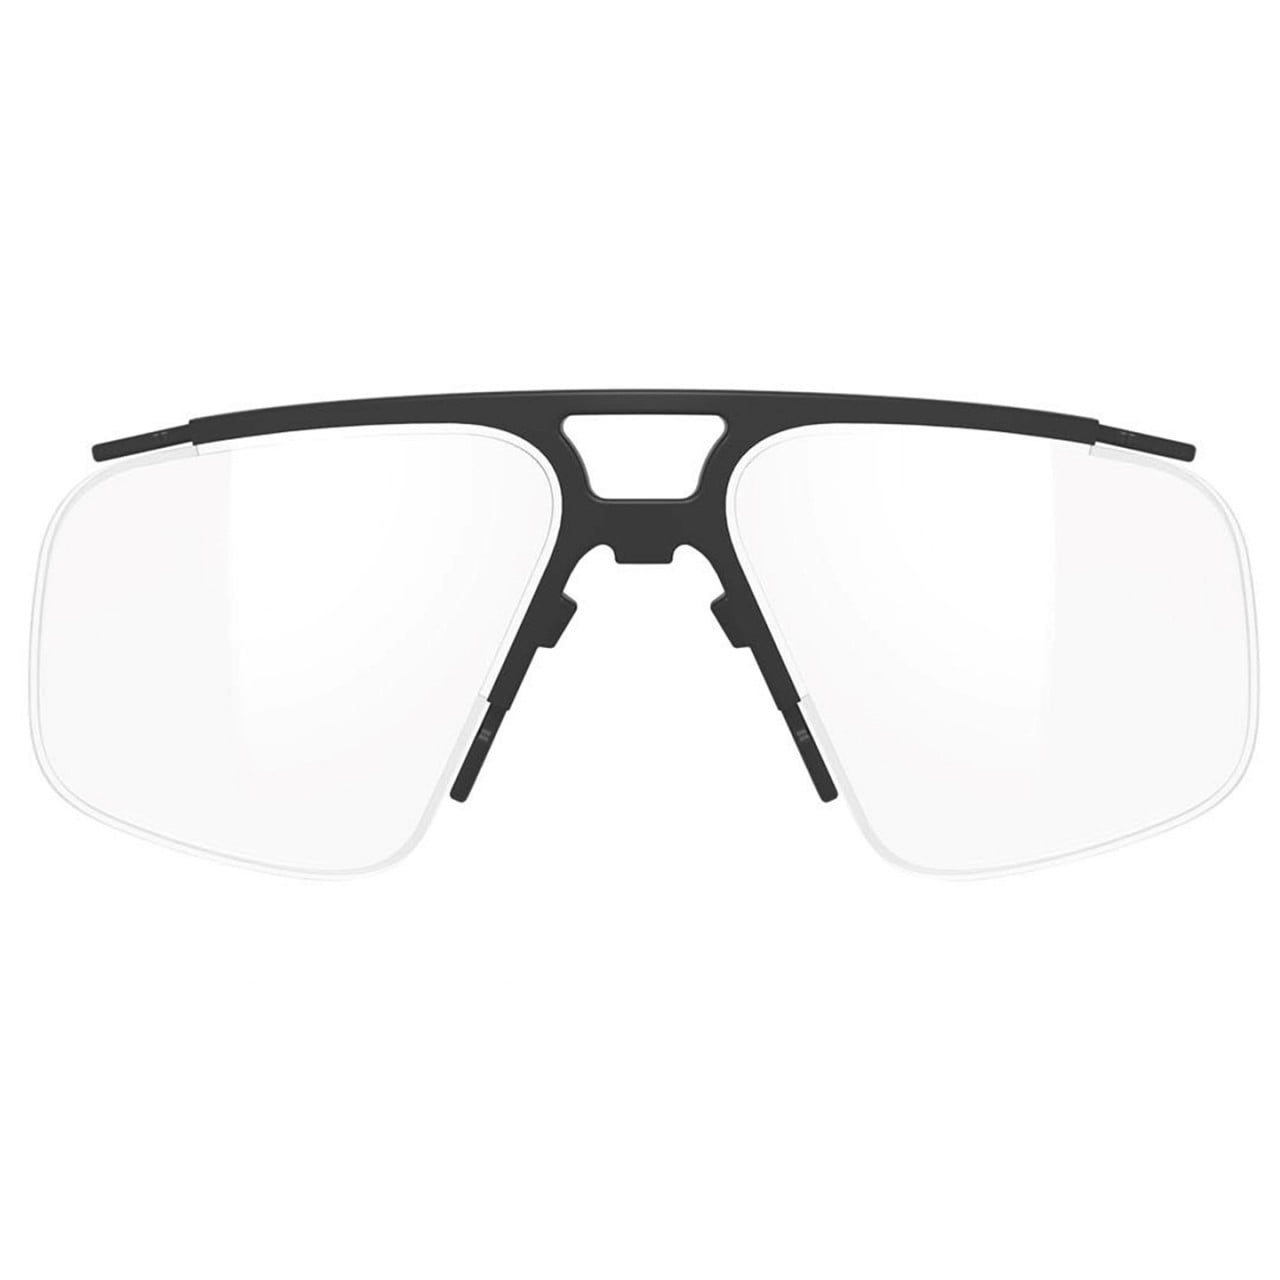 Adaptateur pour lunettes Insert Clip-On Spinshield Air